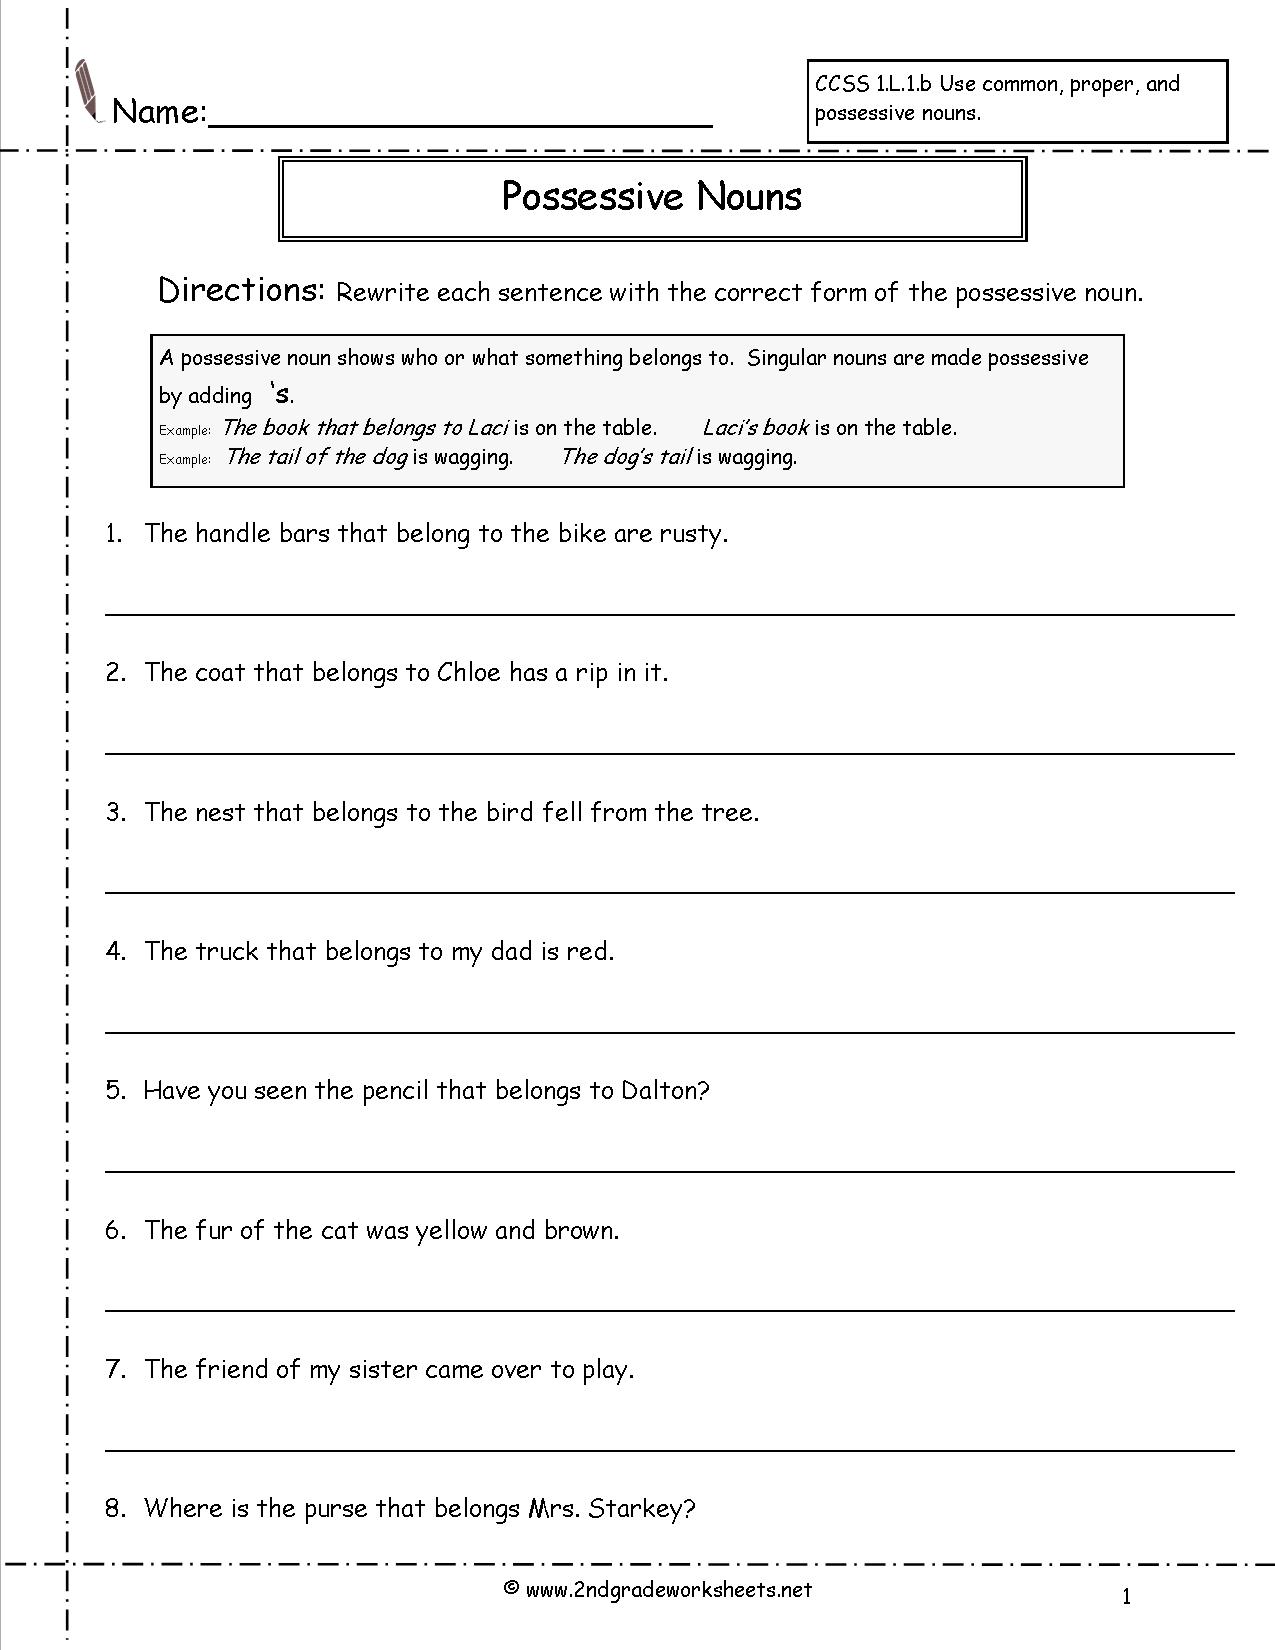 Possessive Nouns Worksheets 2nd Grade Free